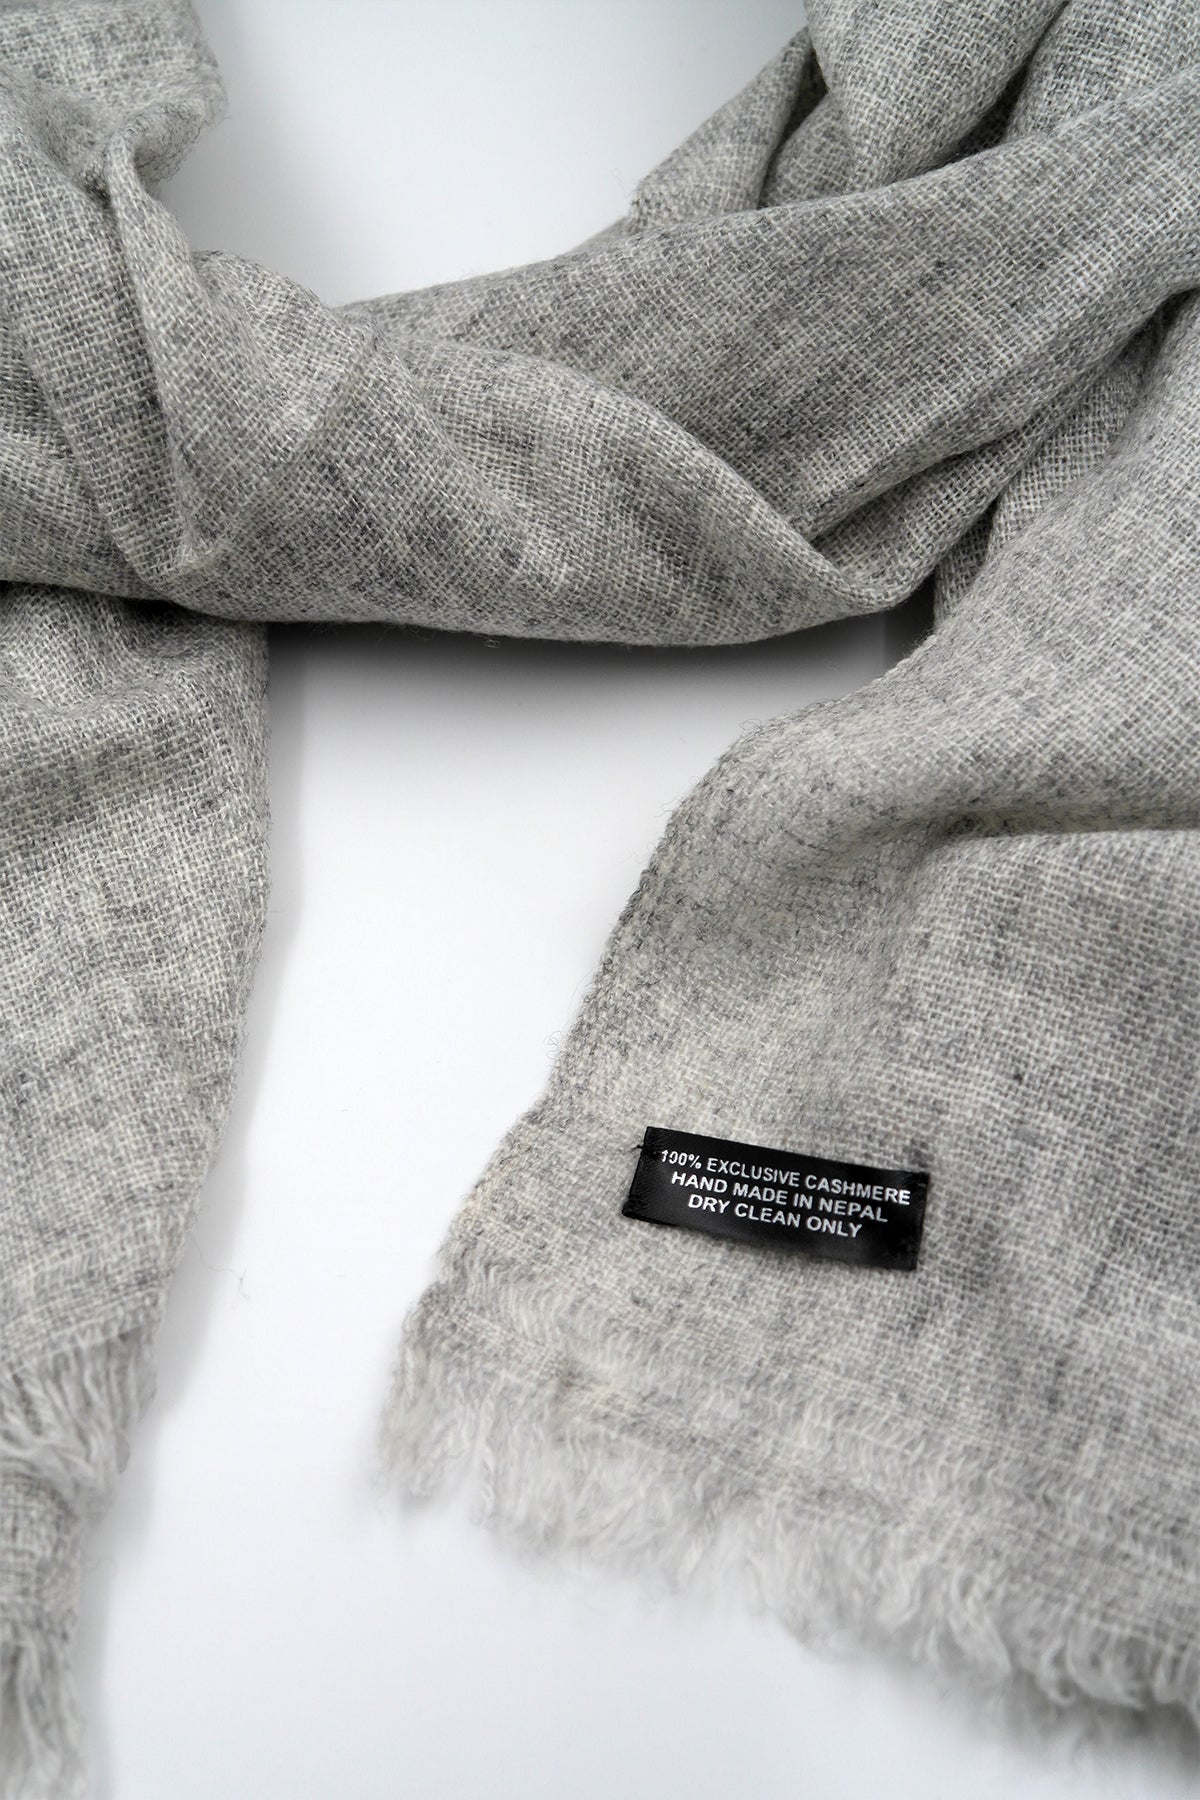 Cashmere Pashmina Shawl Handwoven Nepal wrap Knit Woven scarf Light grey